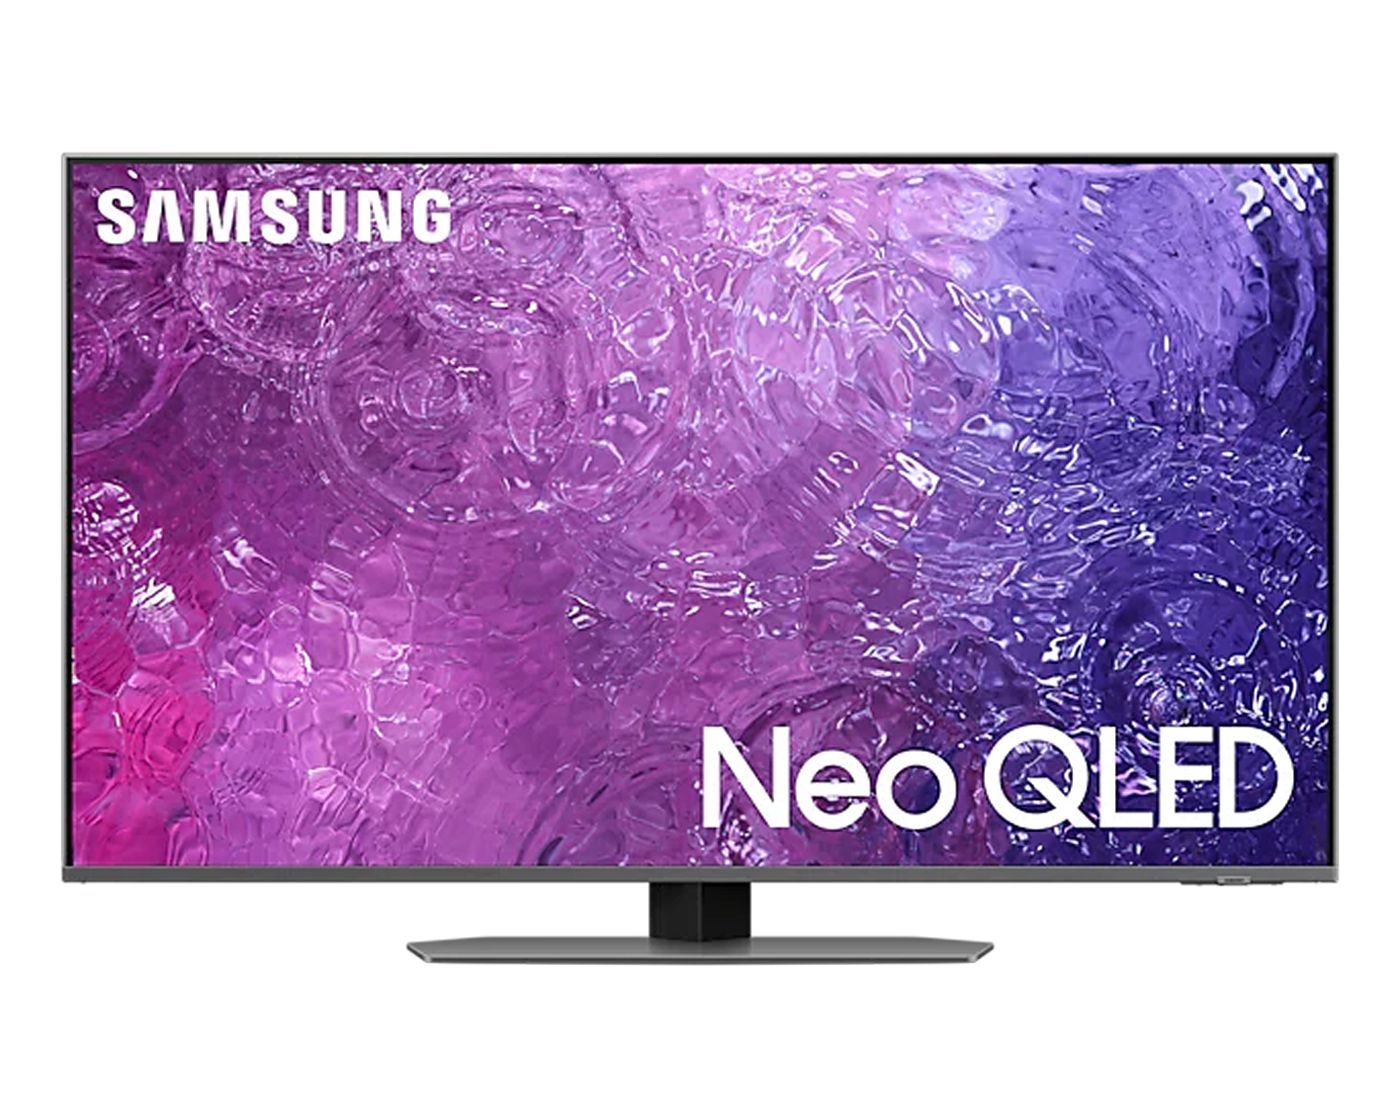 Samsung Neo QLED 4K 65QN93C (2023)